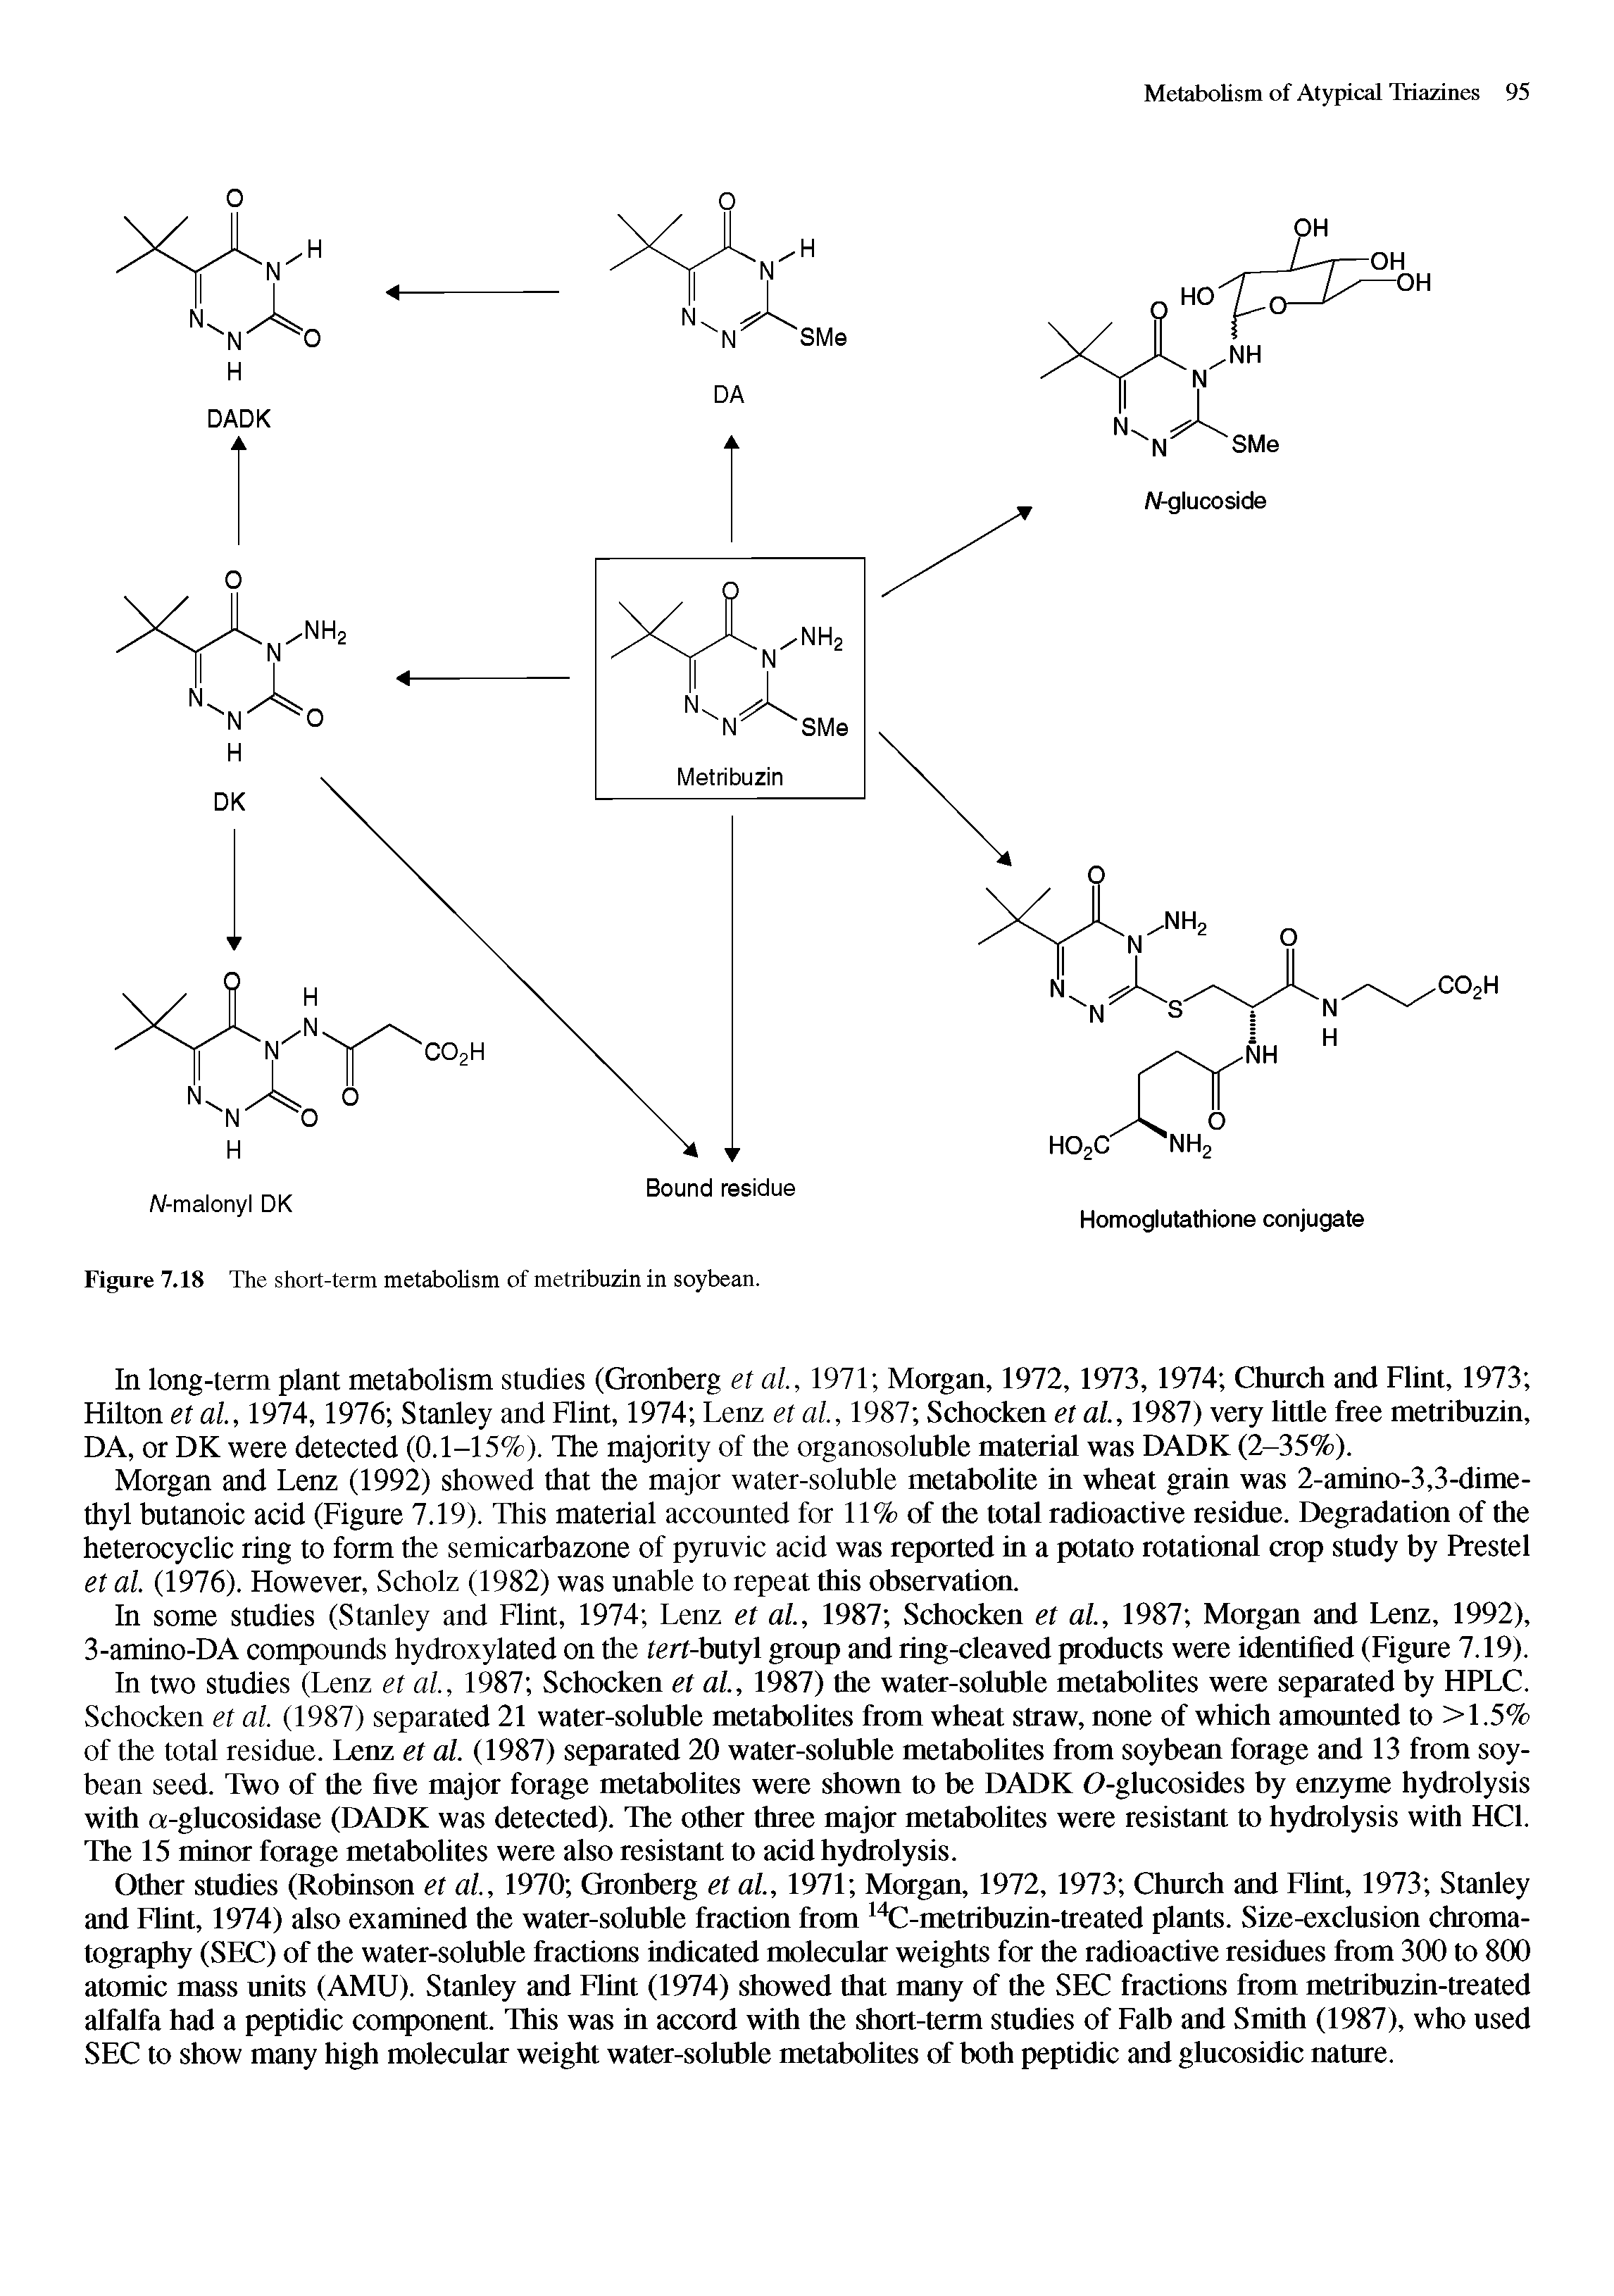 Figure 7.18 The short-term metabolism of metribuzin in soybean.